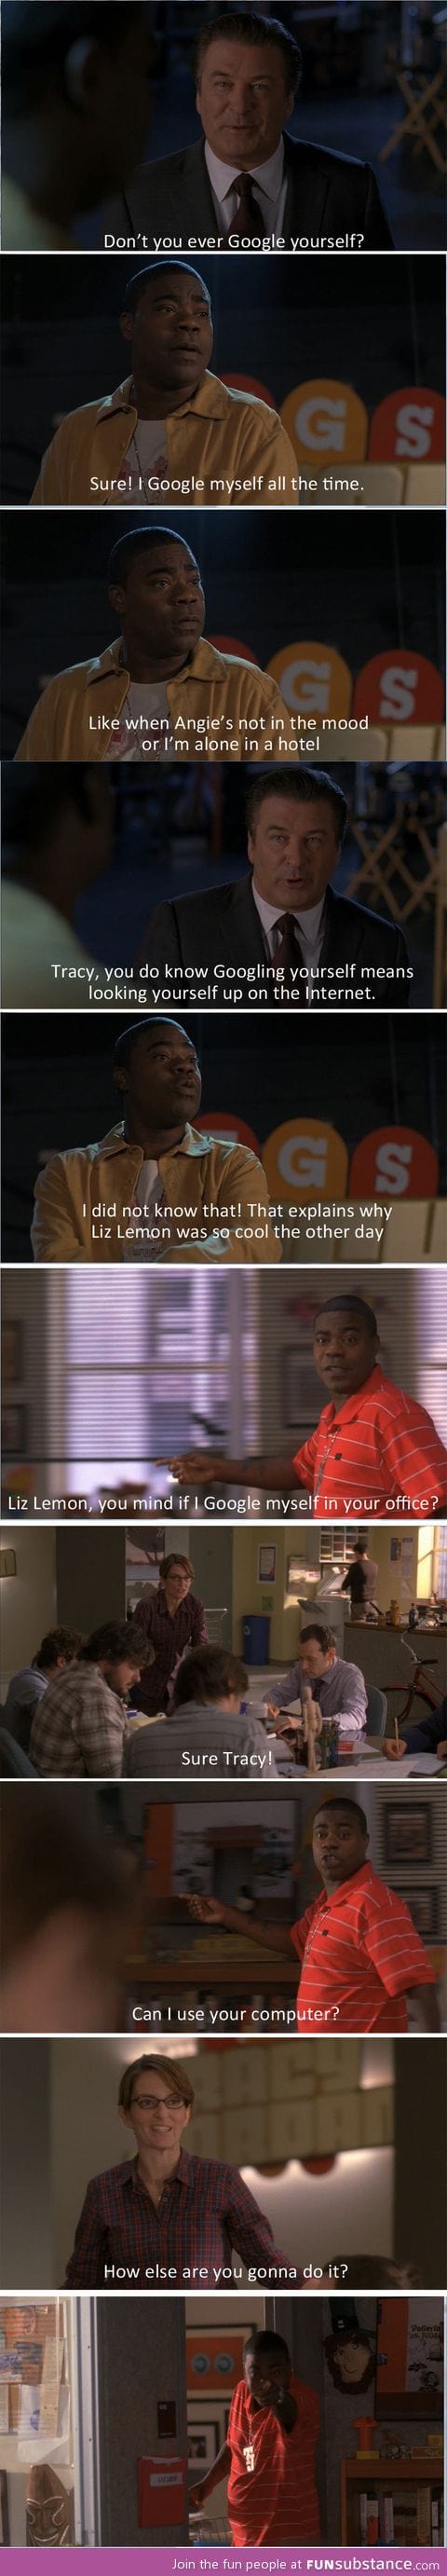 Google yourself?